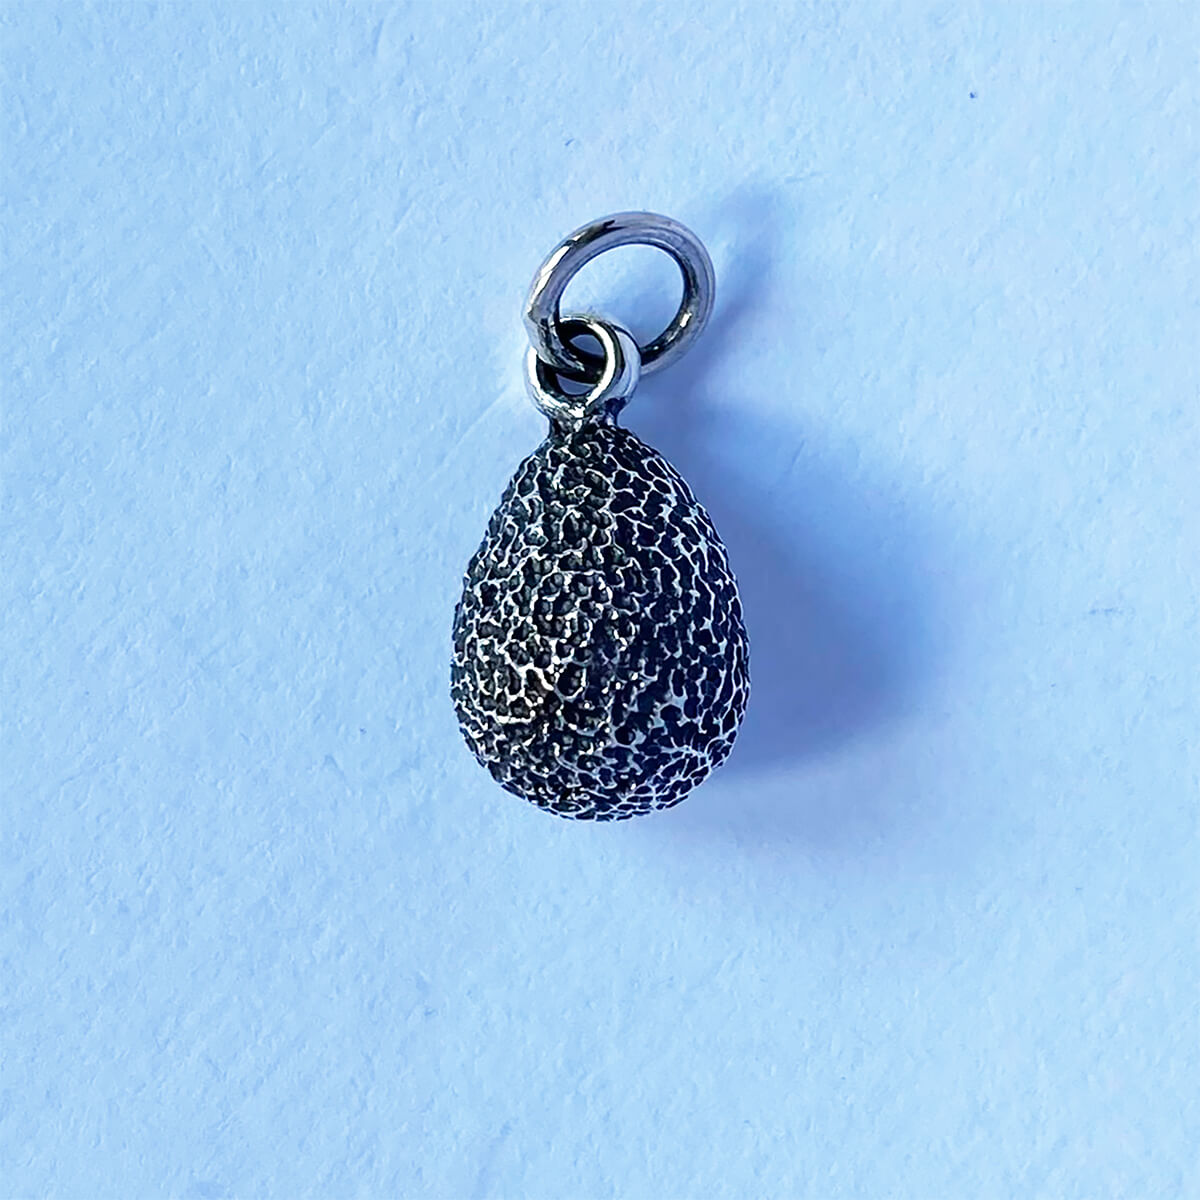 Avocado pear charm sterling silver vegetable pendant